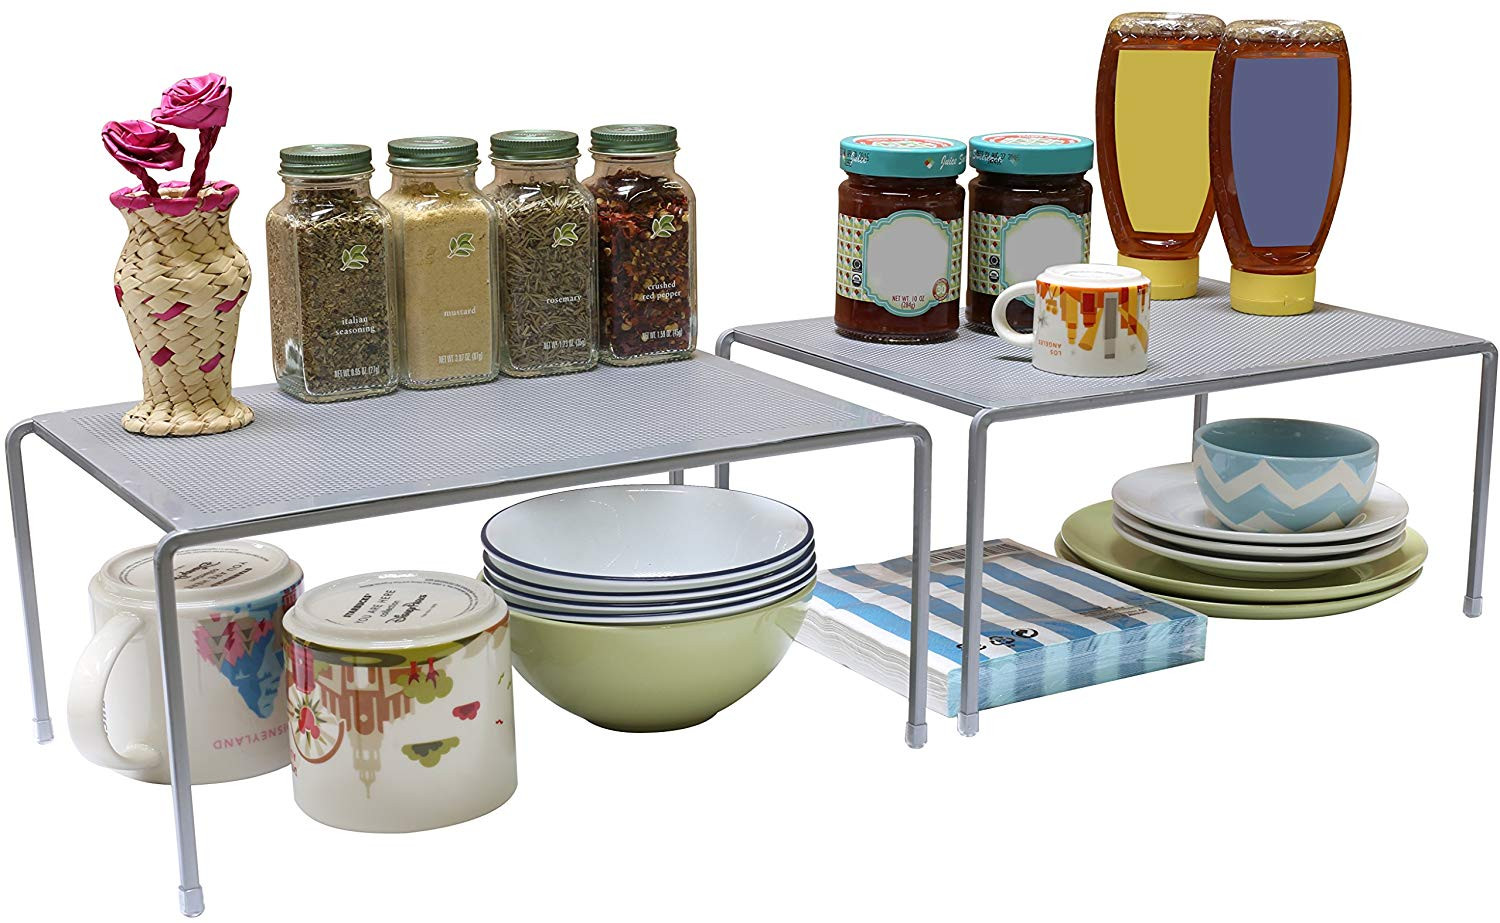 Best ideas about Kitchen Cabinet Organizer
. Save or Pin Counter Shelf Organizer Kitchen Storage Expandable Now.